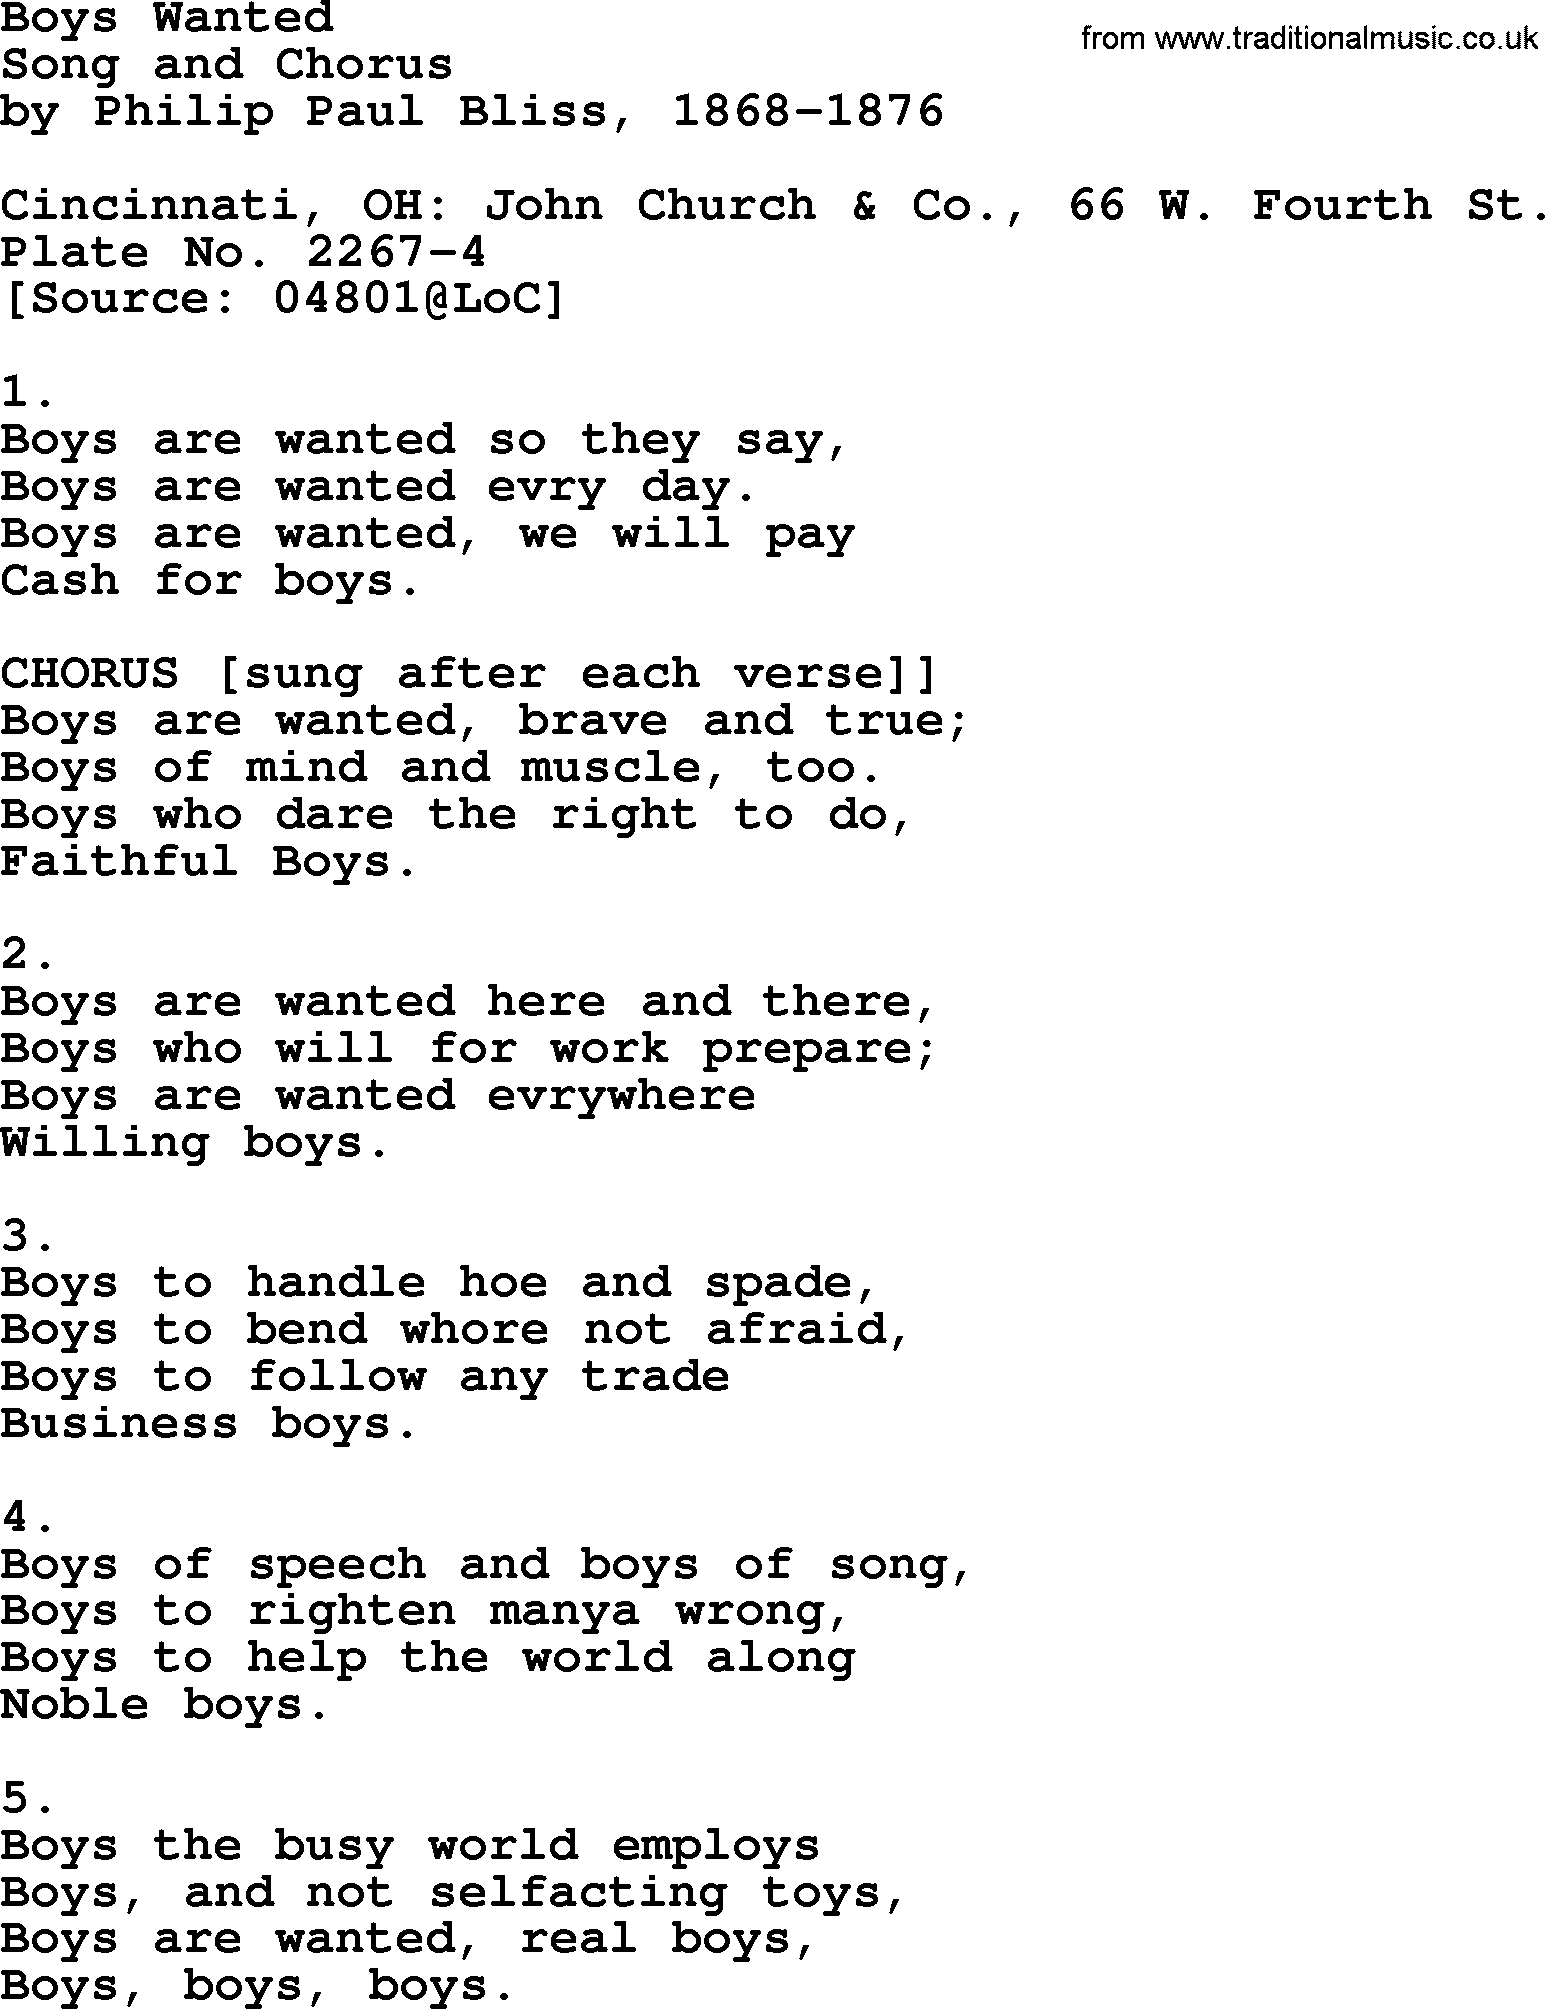 Philip Bliss Song: Boys Wanted, lyrics